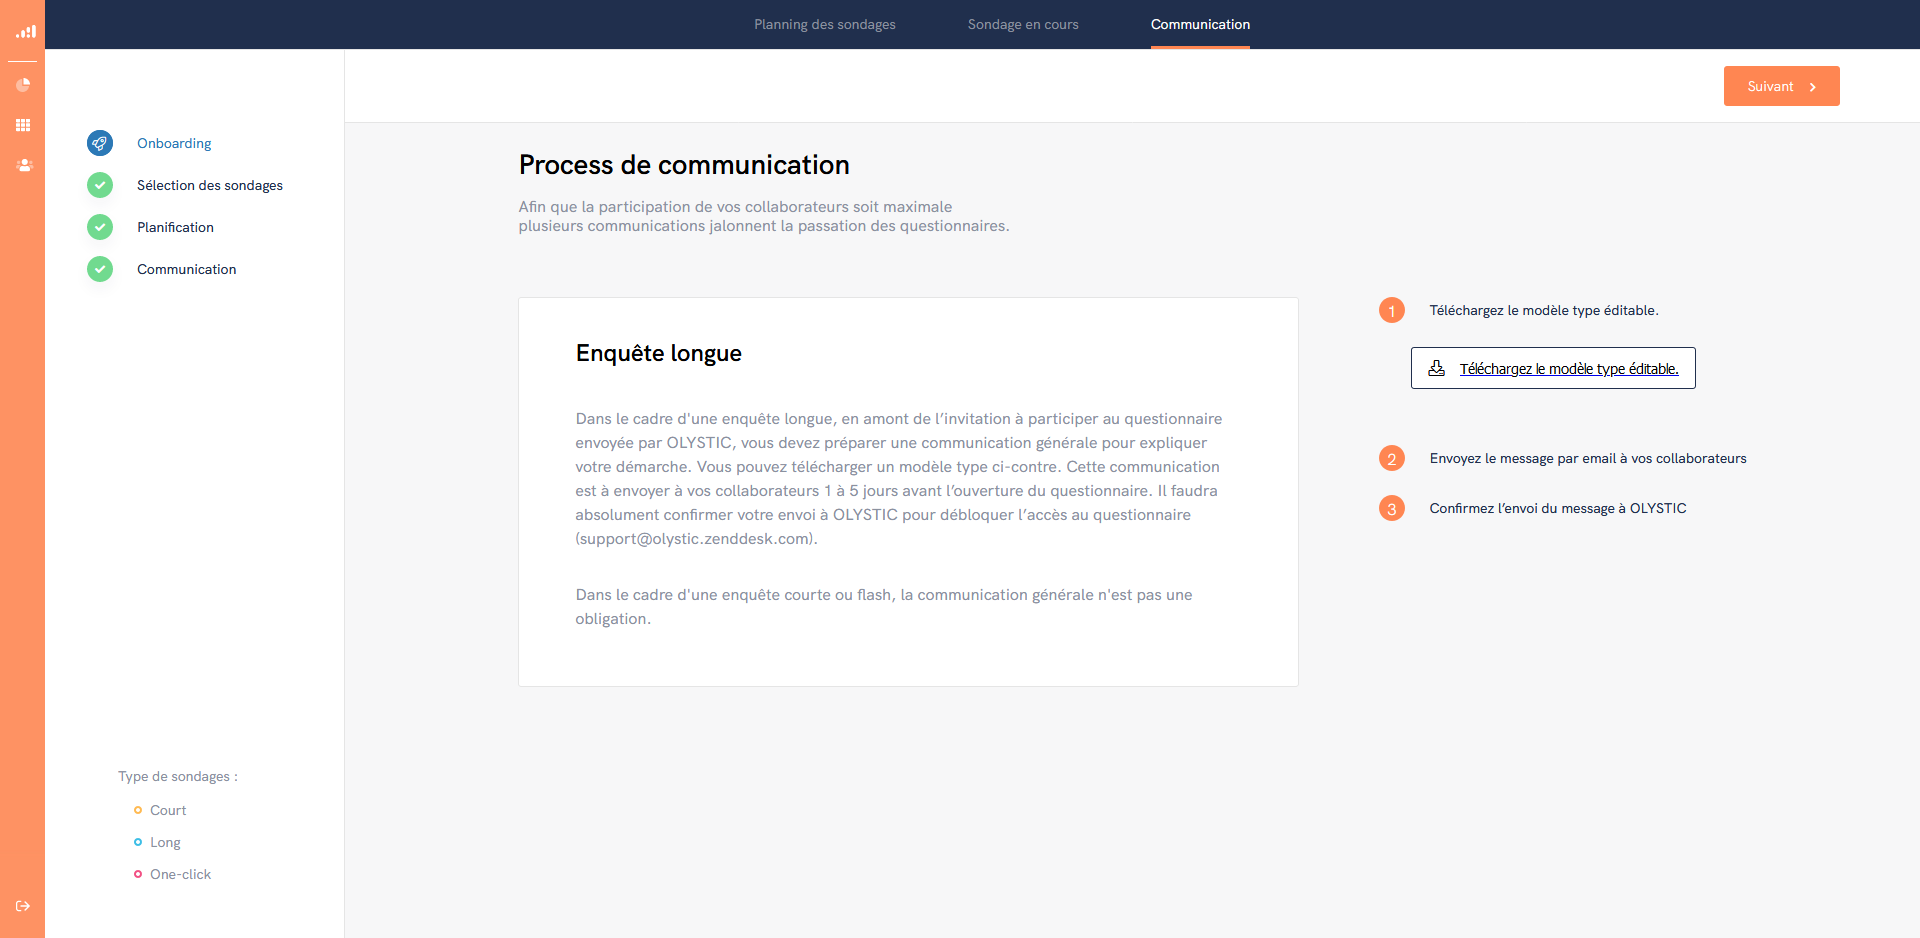 Process_CommunicationOlystic.png